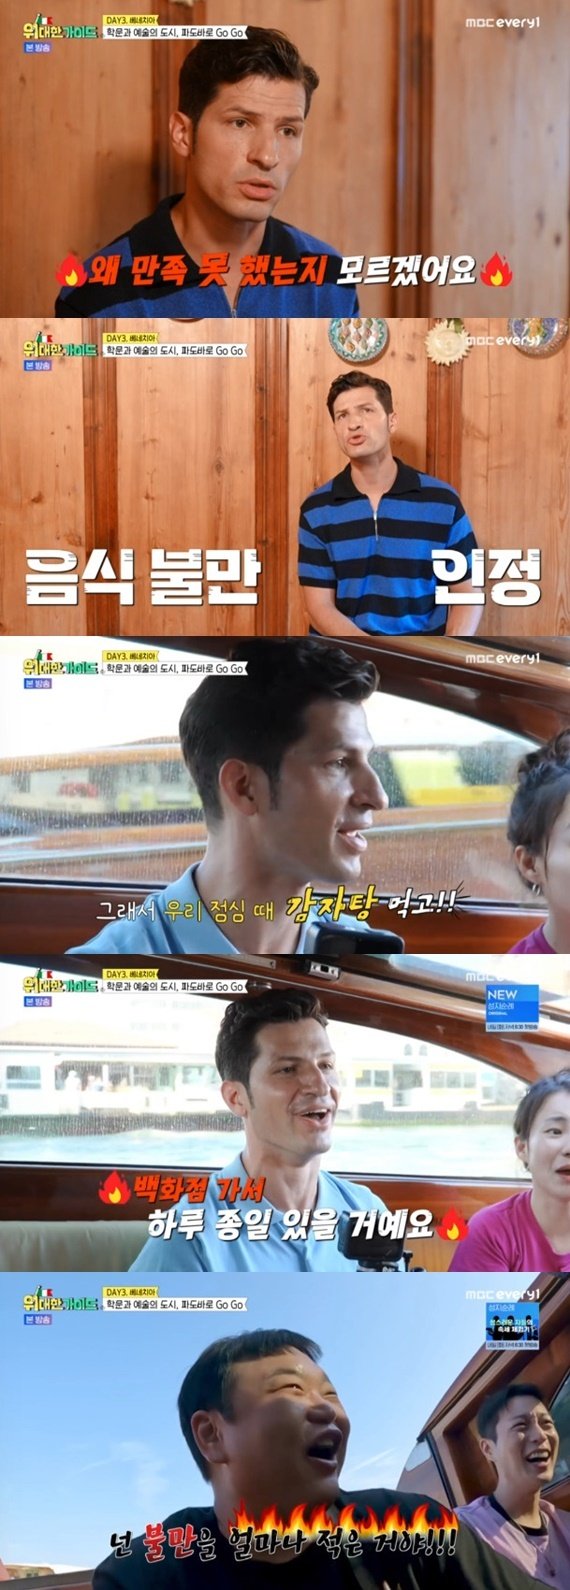 MBC every1 '위대한 가이드' 캡처